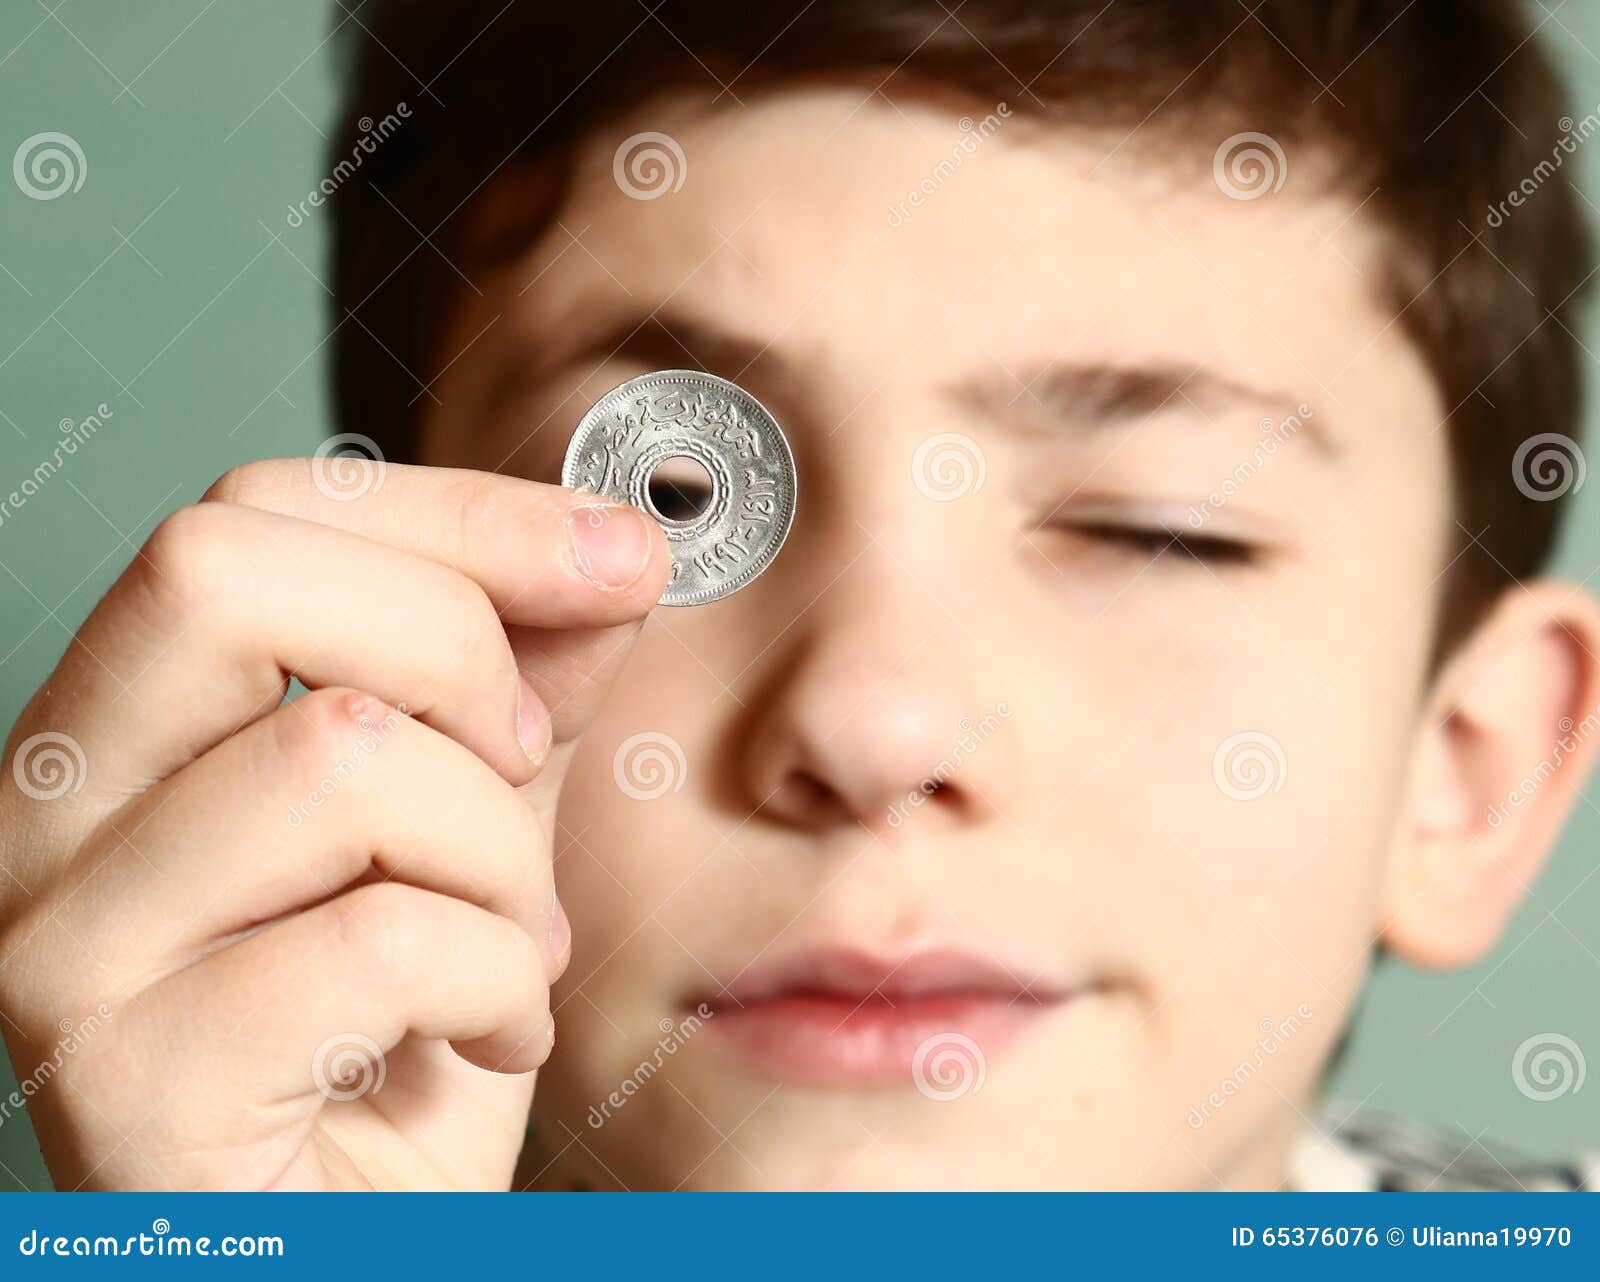 boy preteen numismatic collector show his coin